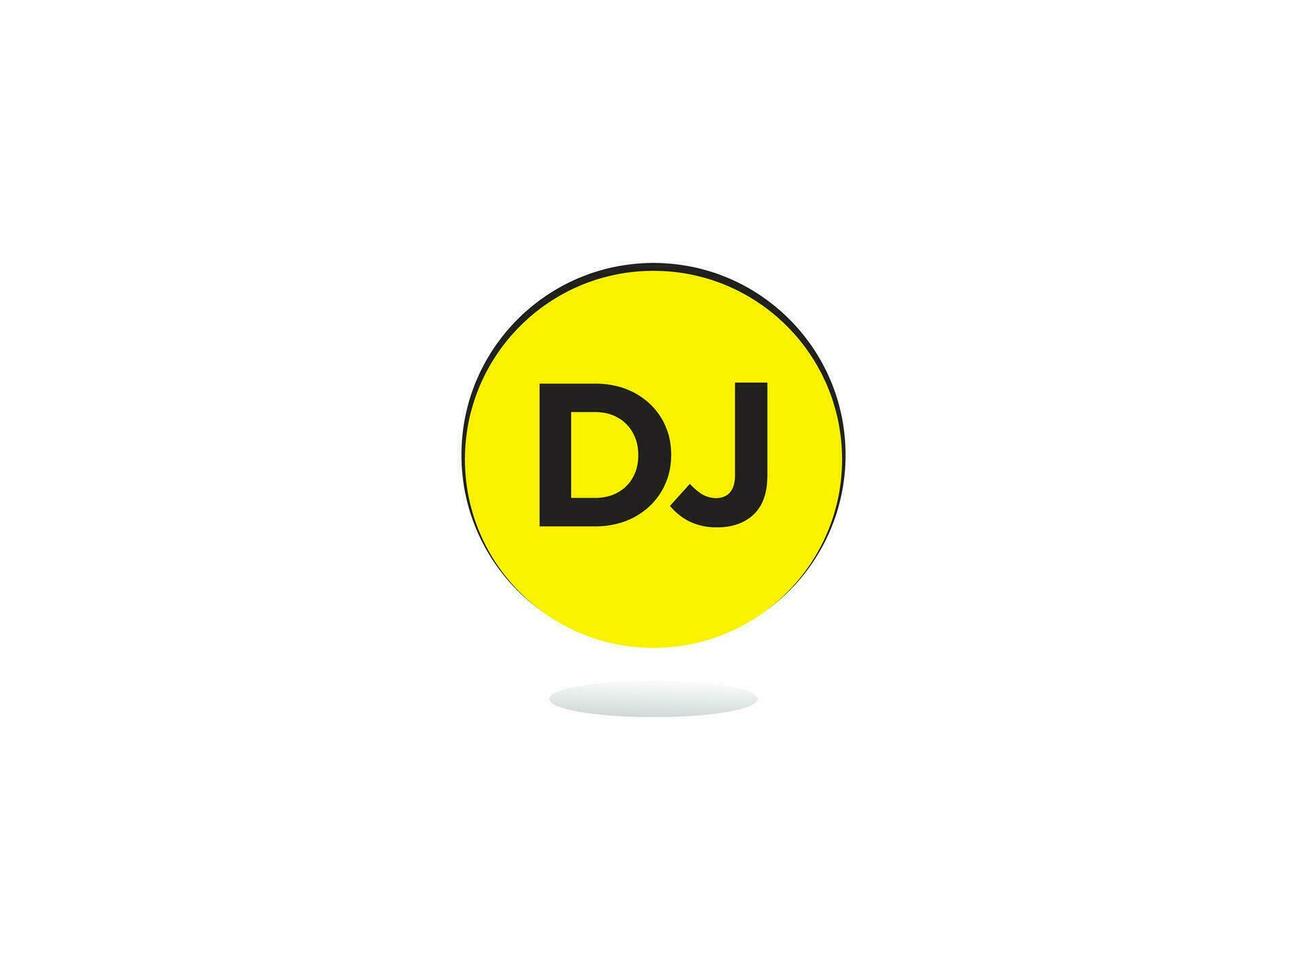 Creative Dj jd Logo Letter Vector Icon For Shop